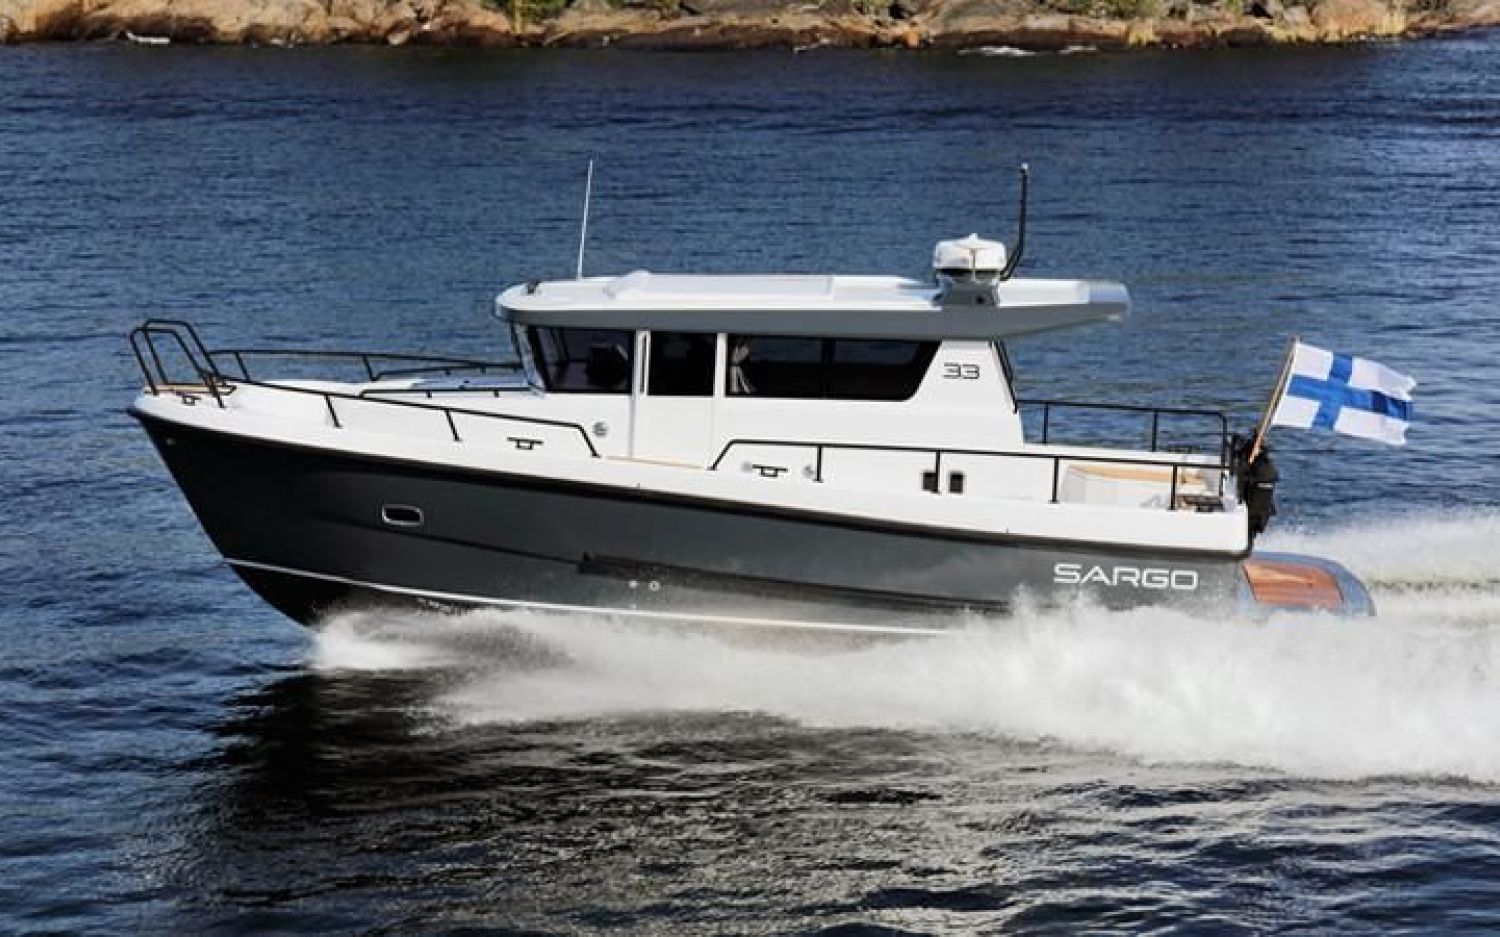 Sargo 33 Explorer, Motoryacht for sale by HollandBoat International Yachtbrokers